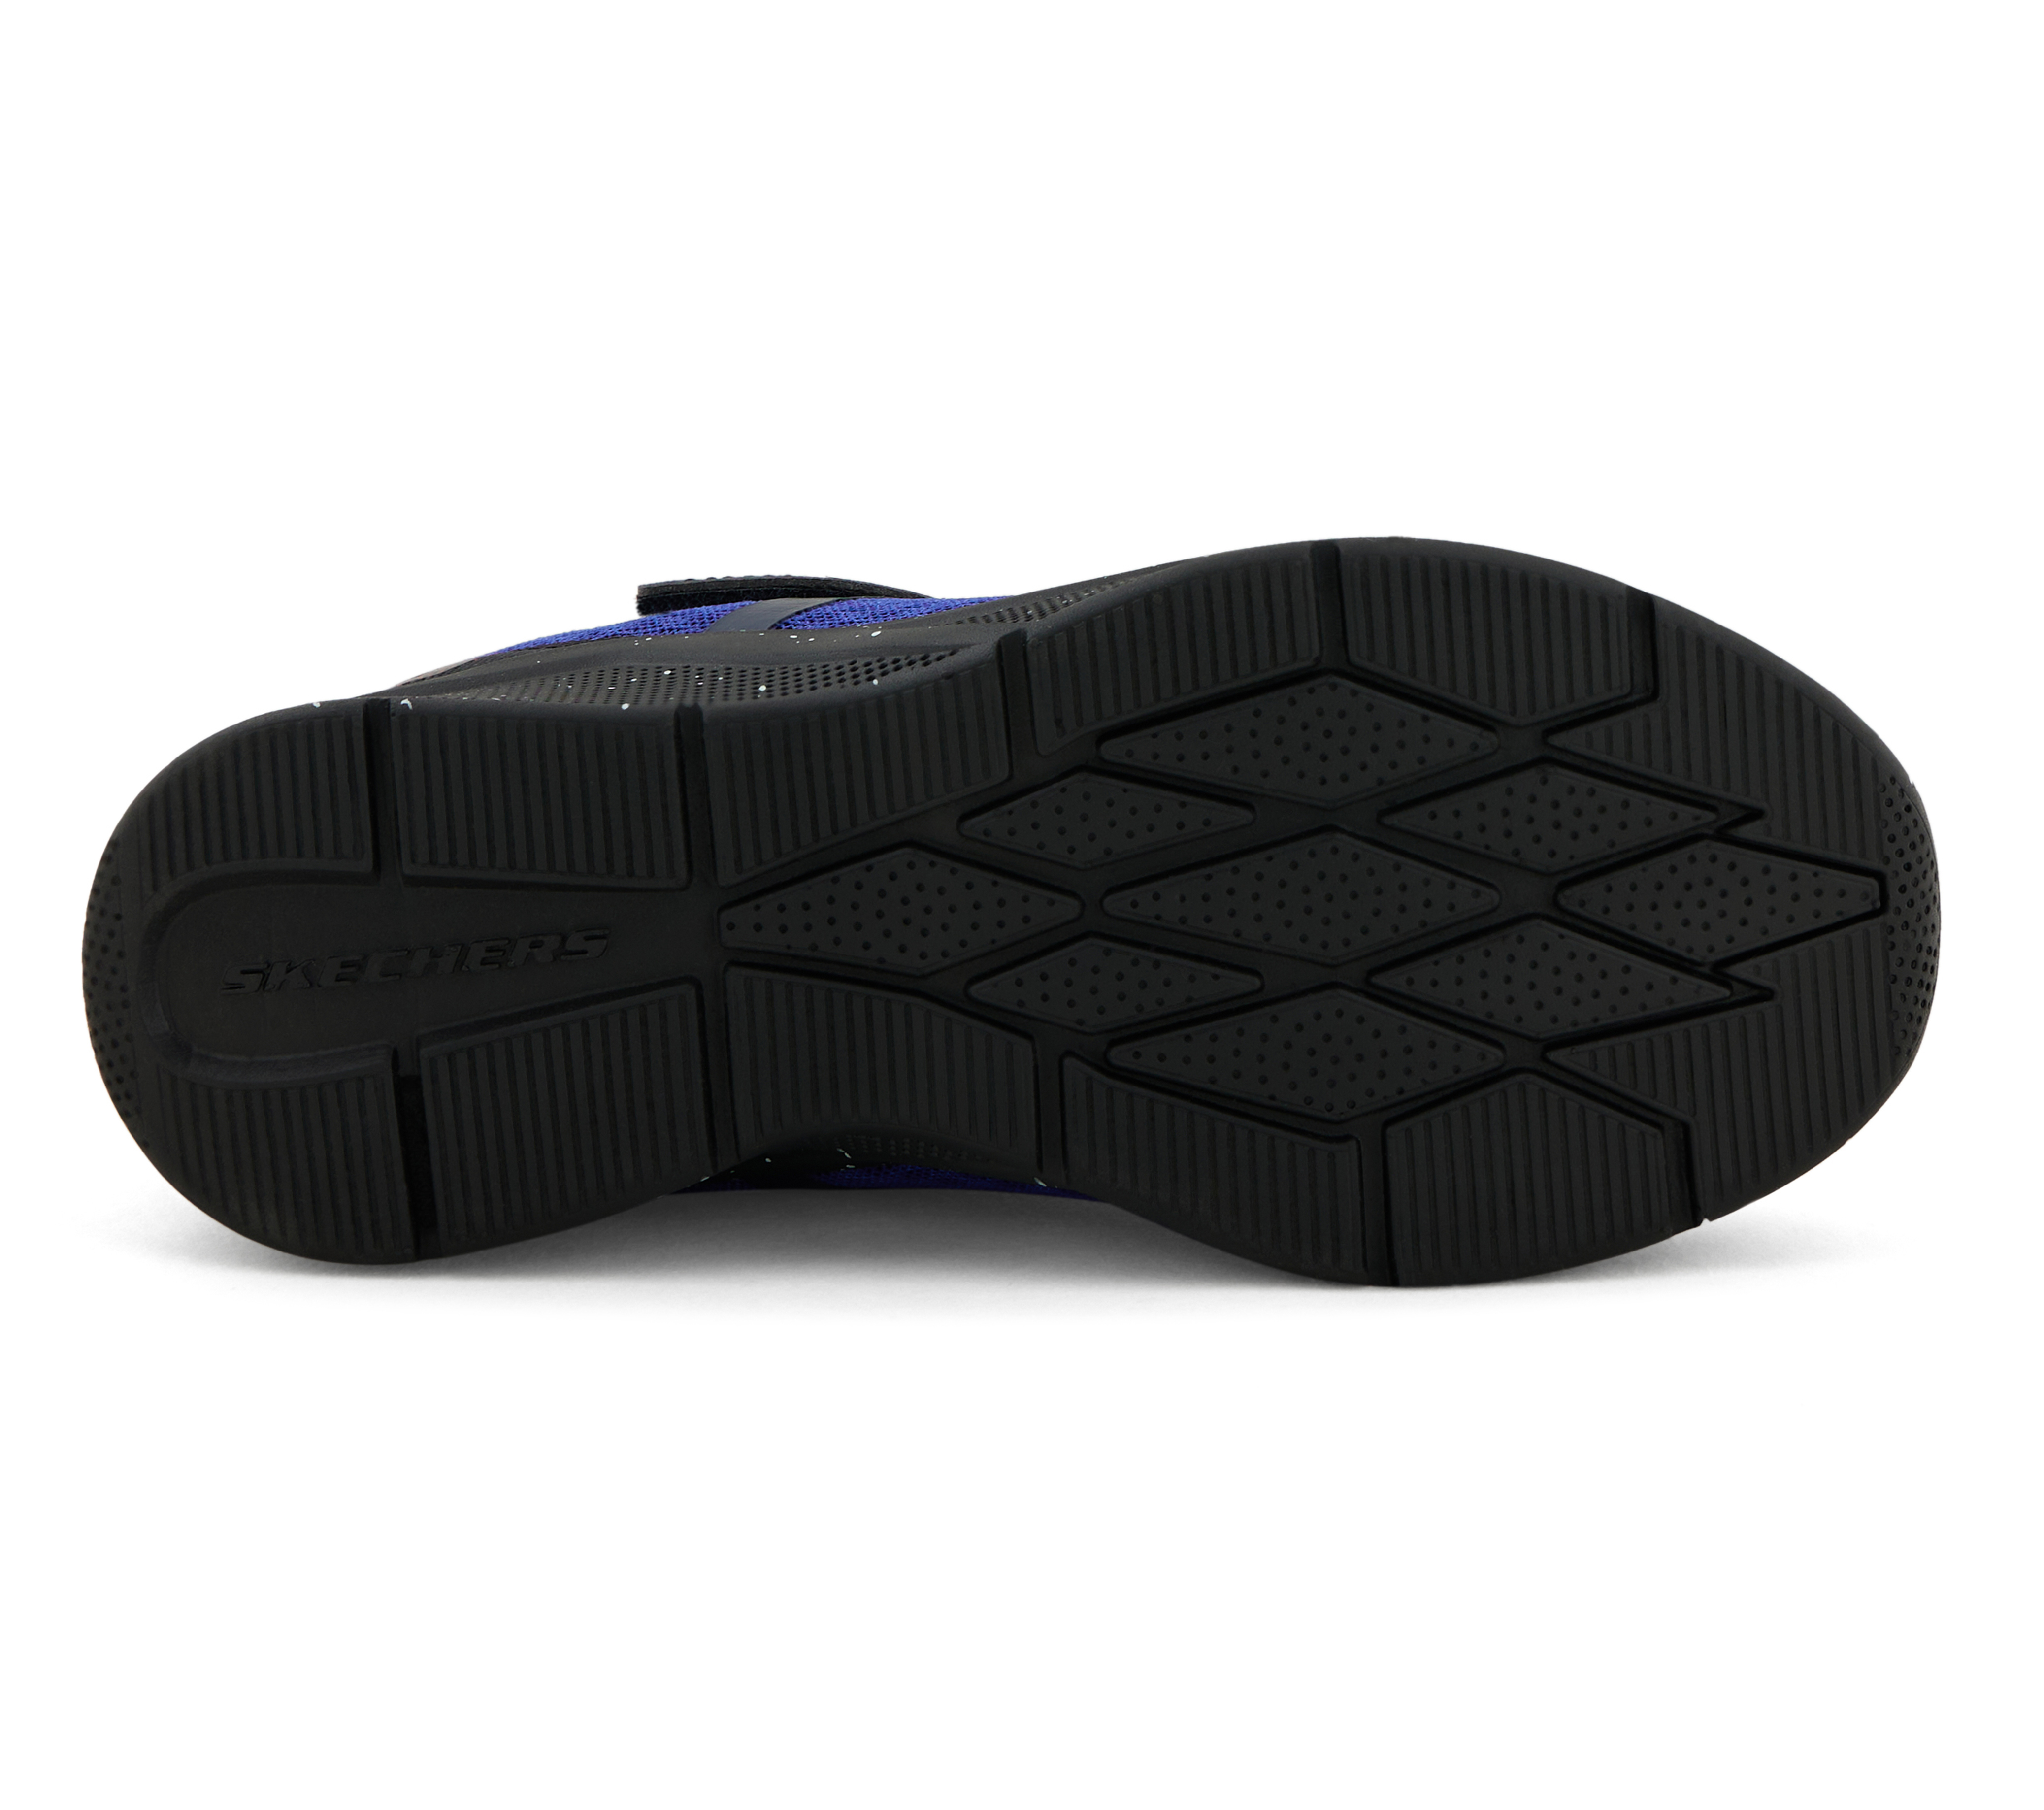 MICROSPEC, BLUE/NAVY Footwear Bottom View